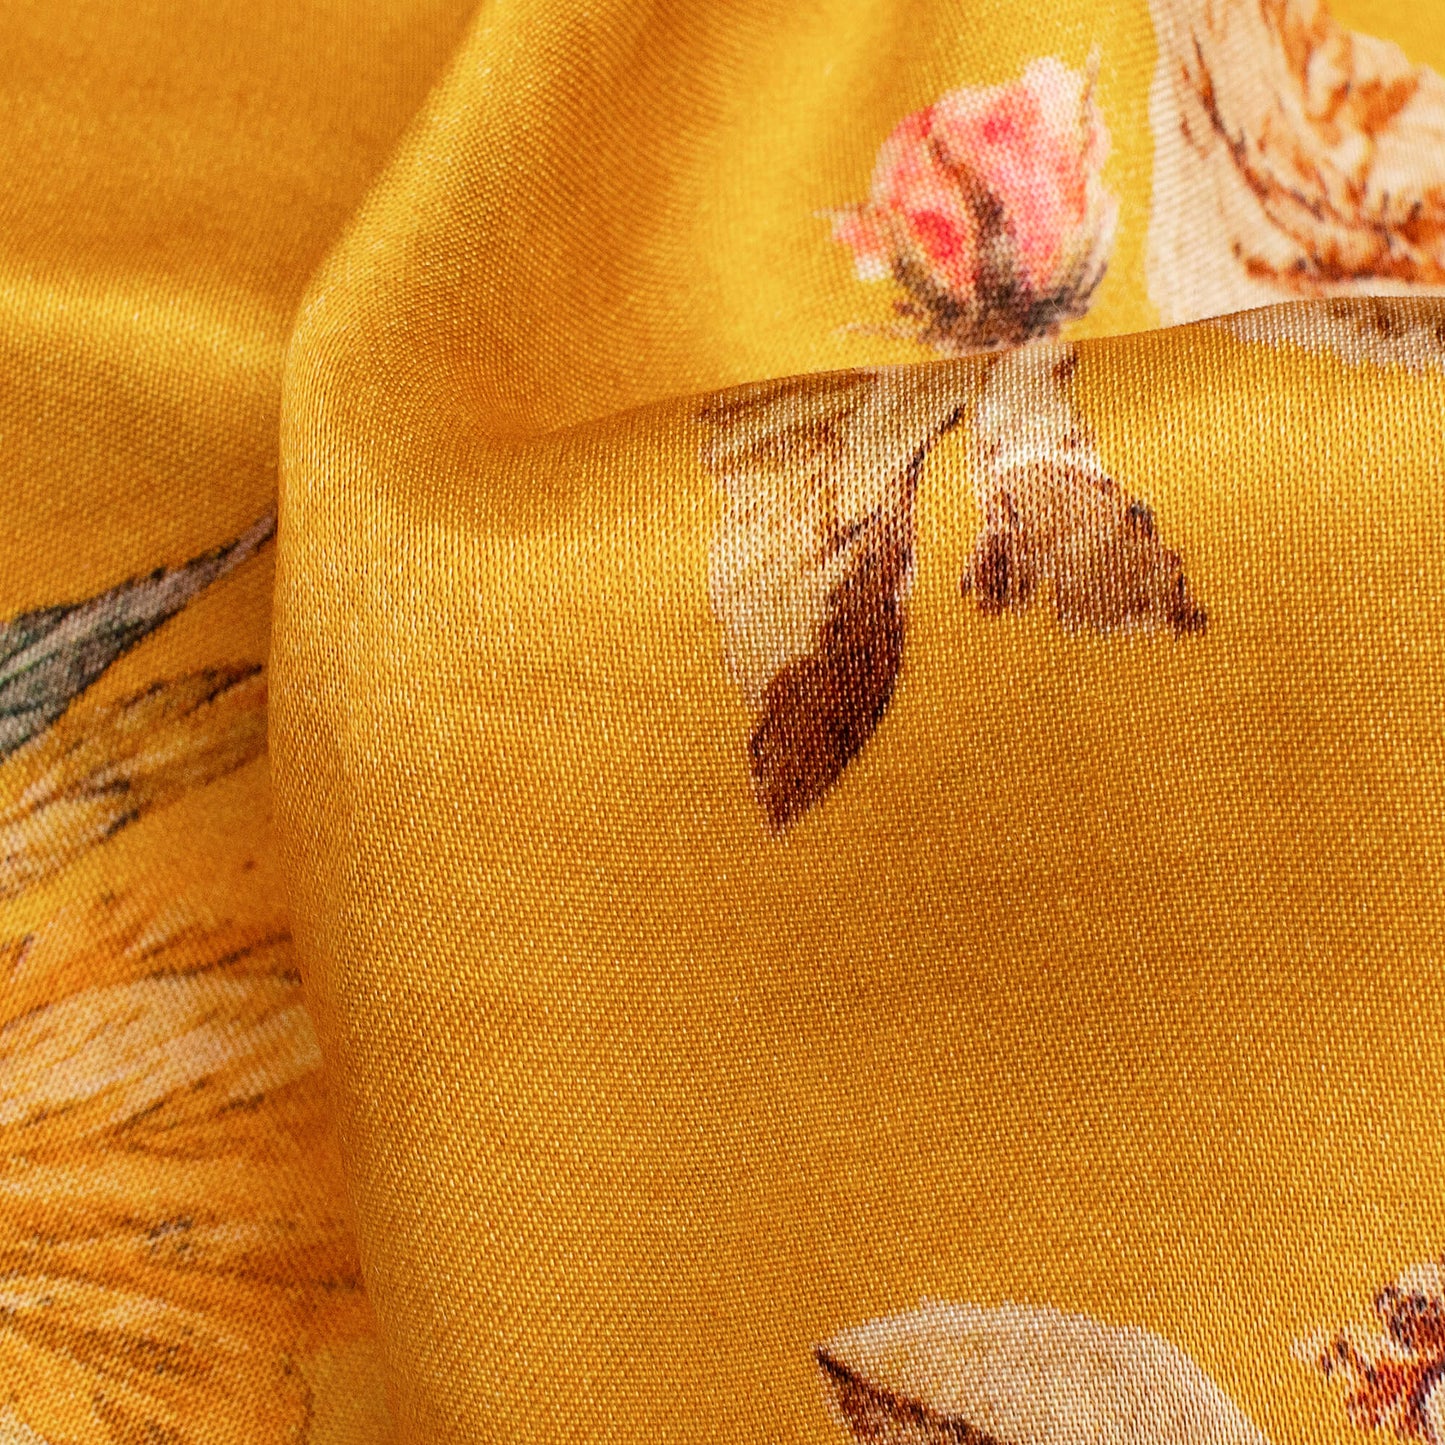 Fire Yellow And Rose Pink Floral Pattern Digital Print Viscose Gaji Silk Fabric